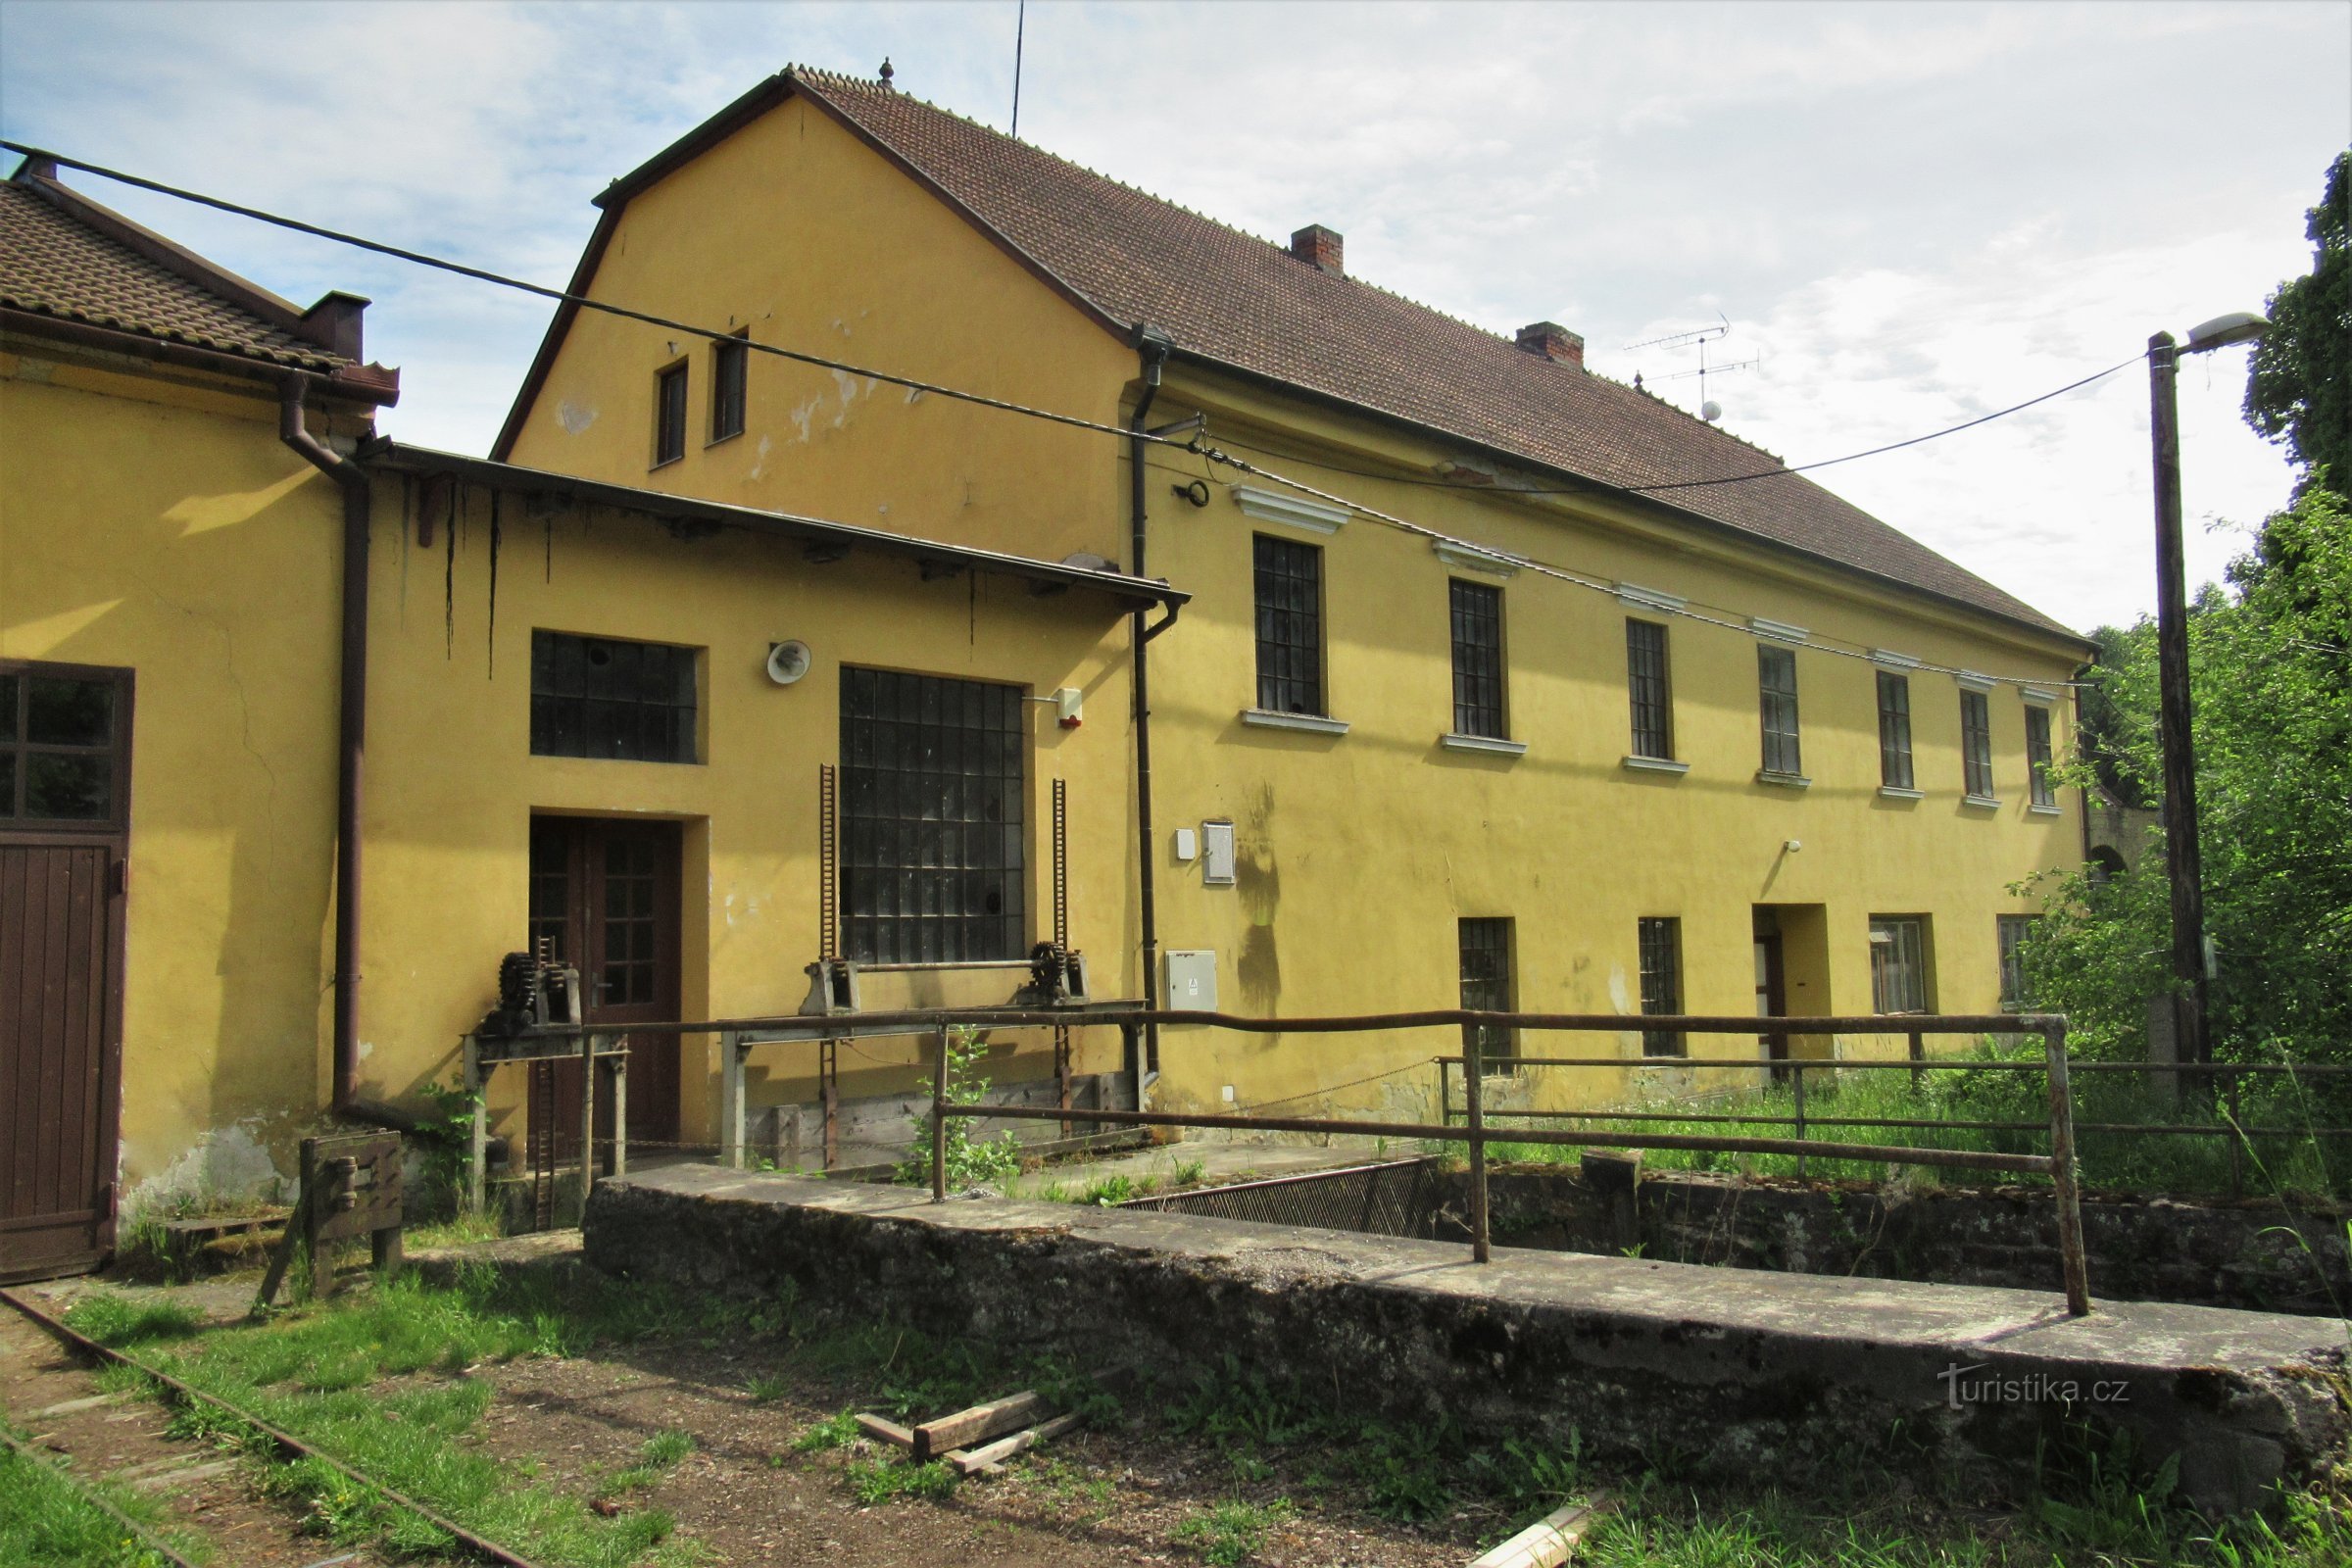 Jaroš's mill in Zboňek